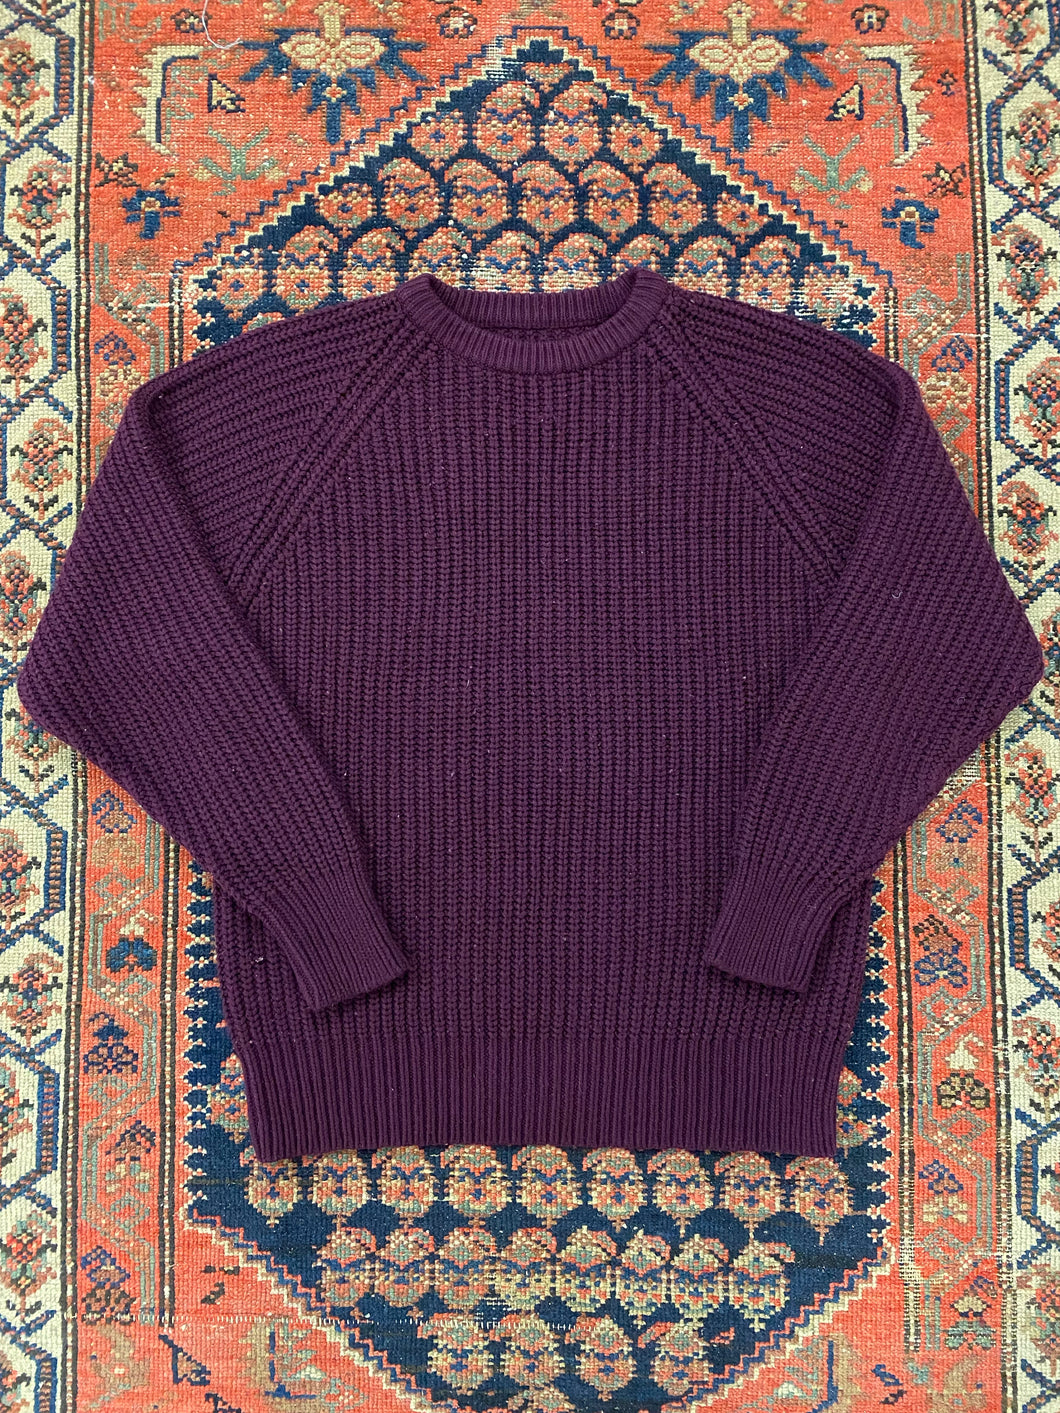 Vintage Purple Knit Sweater - M